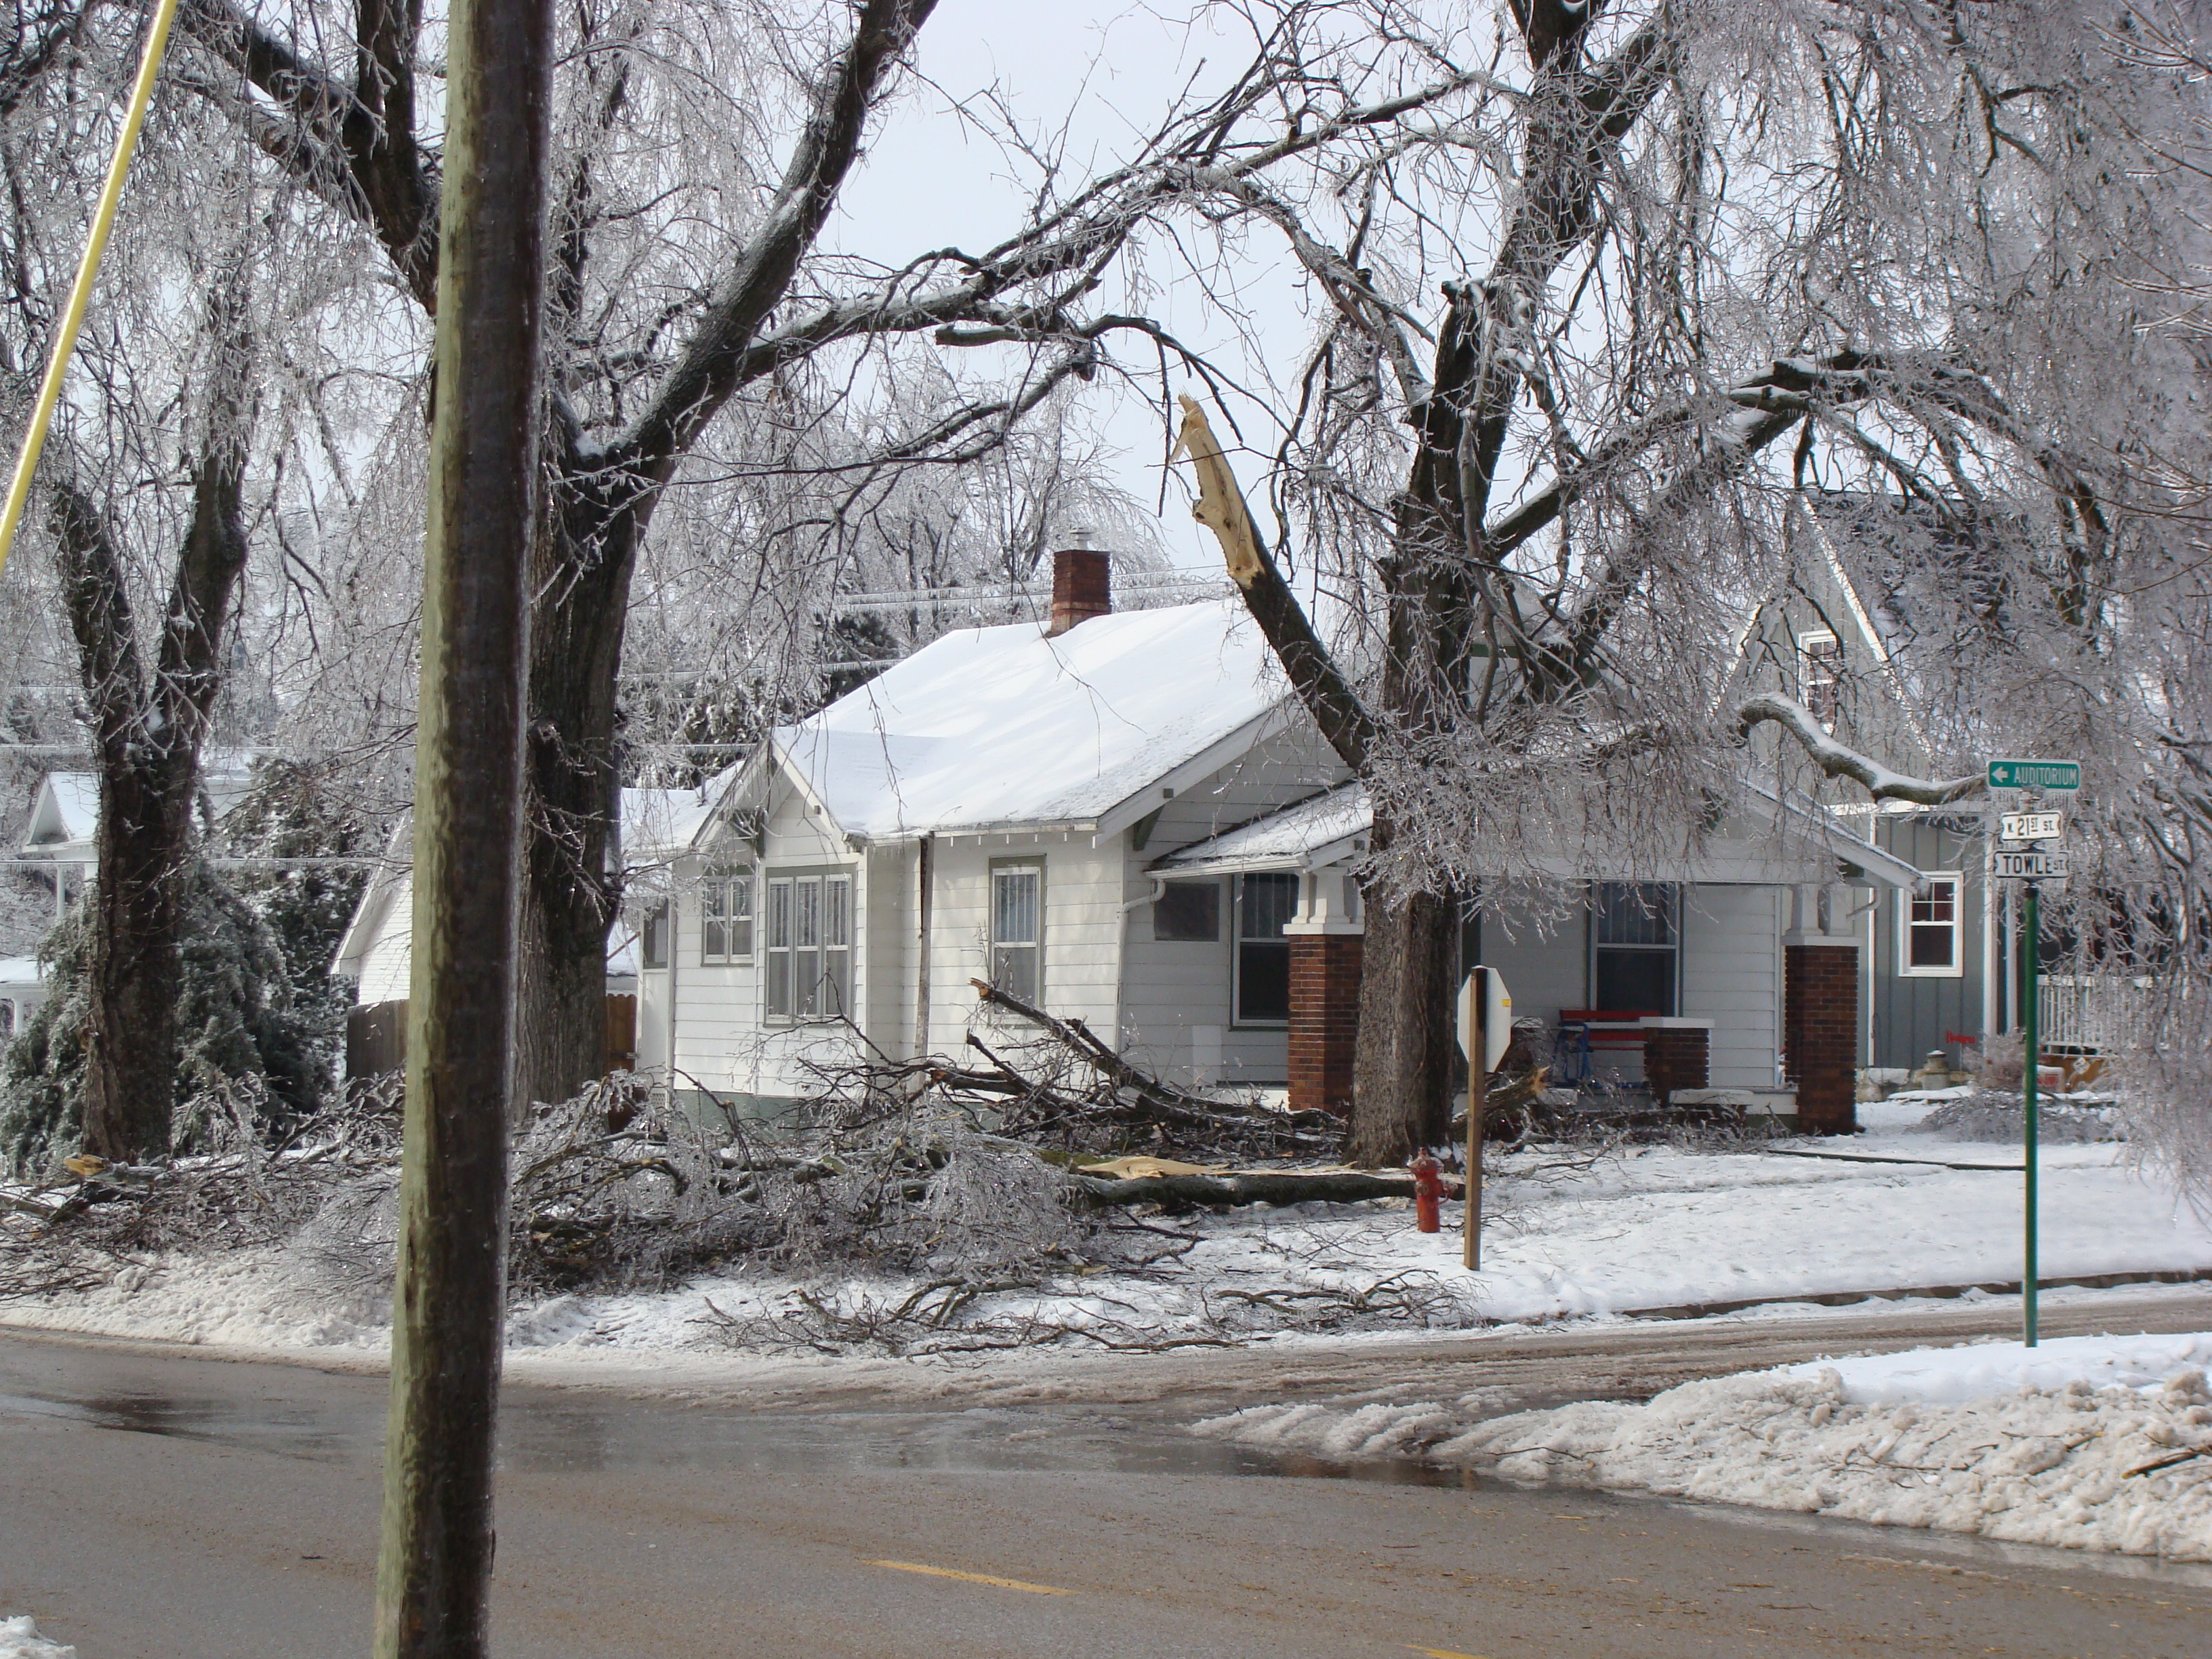 Ice storm brings down limb in homeowner's yard. 